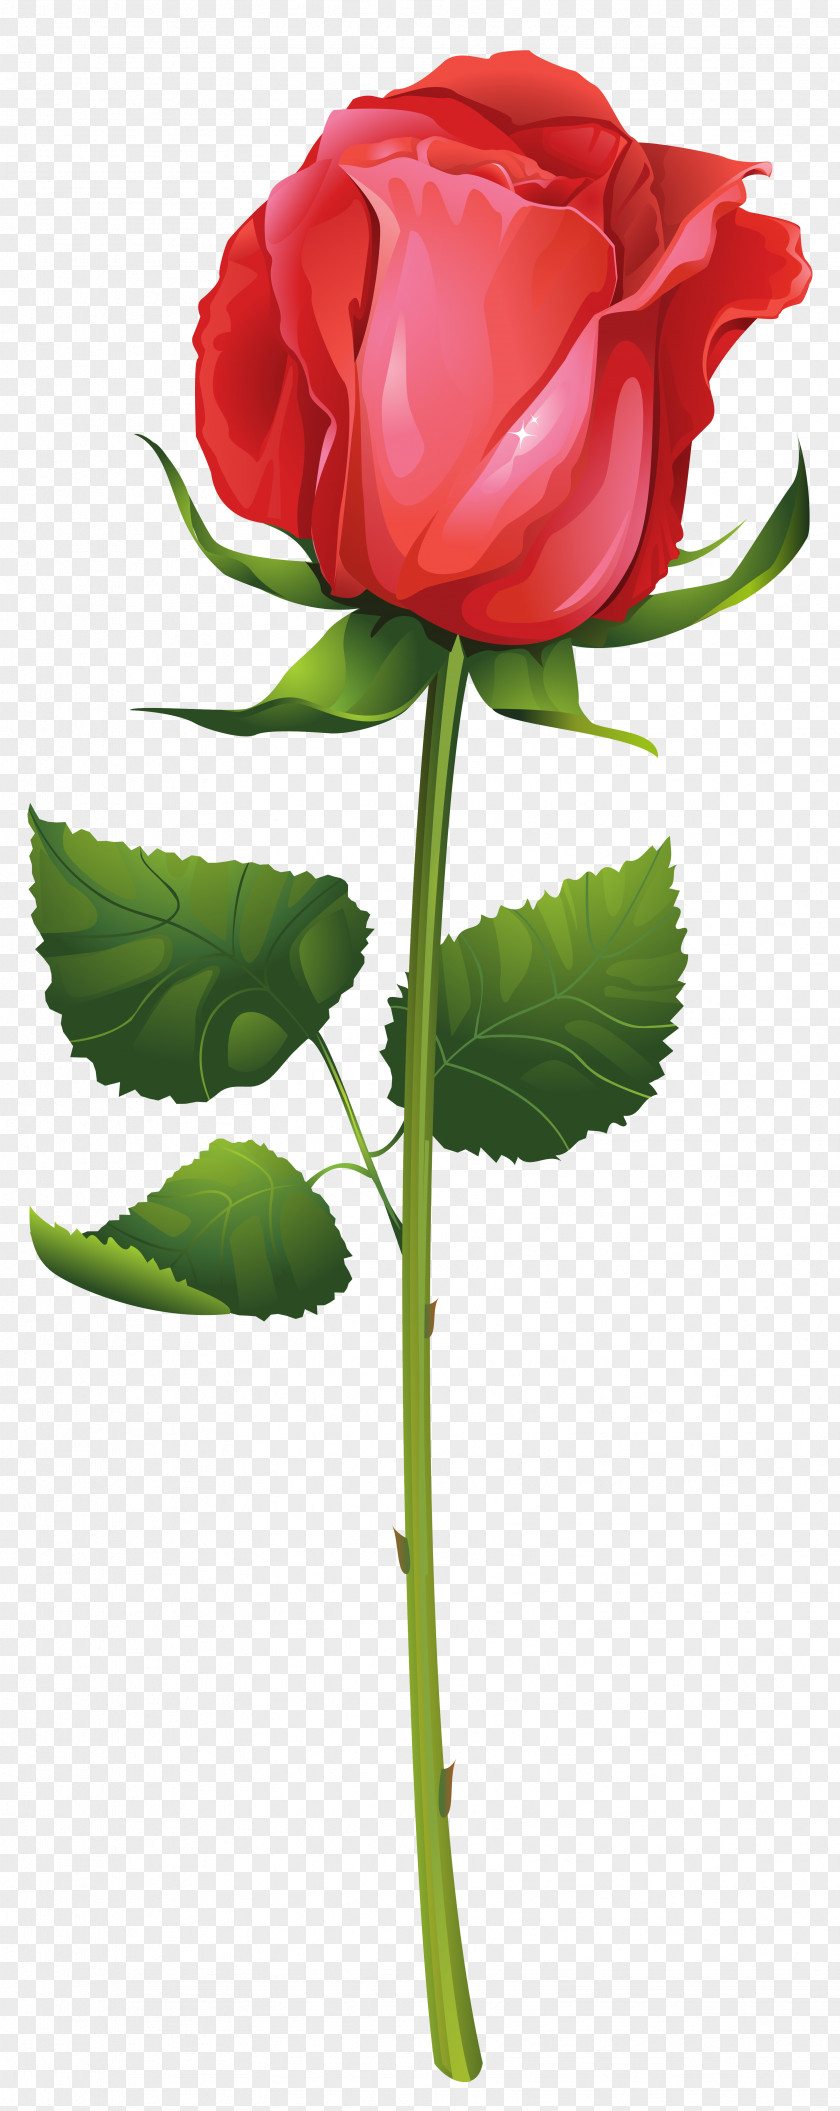 Rose With Stem Clip Art Image Flower Plant PNG